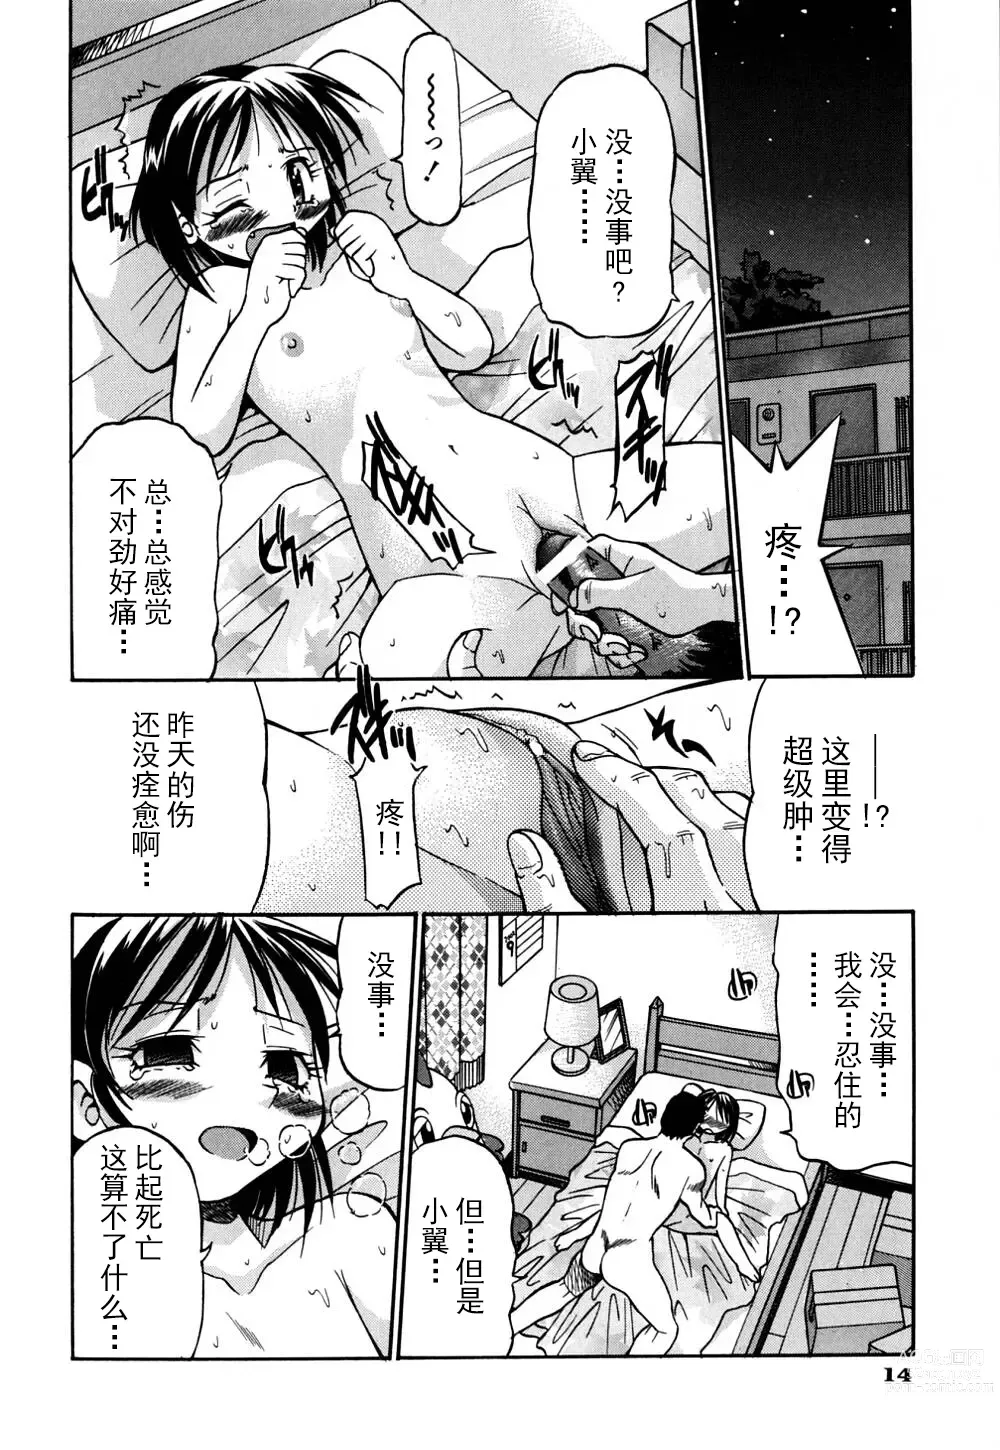 Page 21 of manga Ground Ero